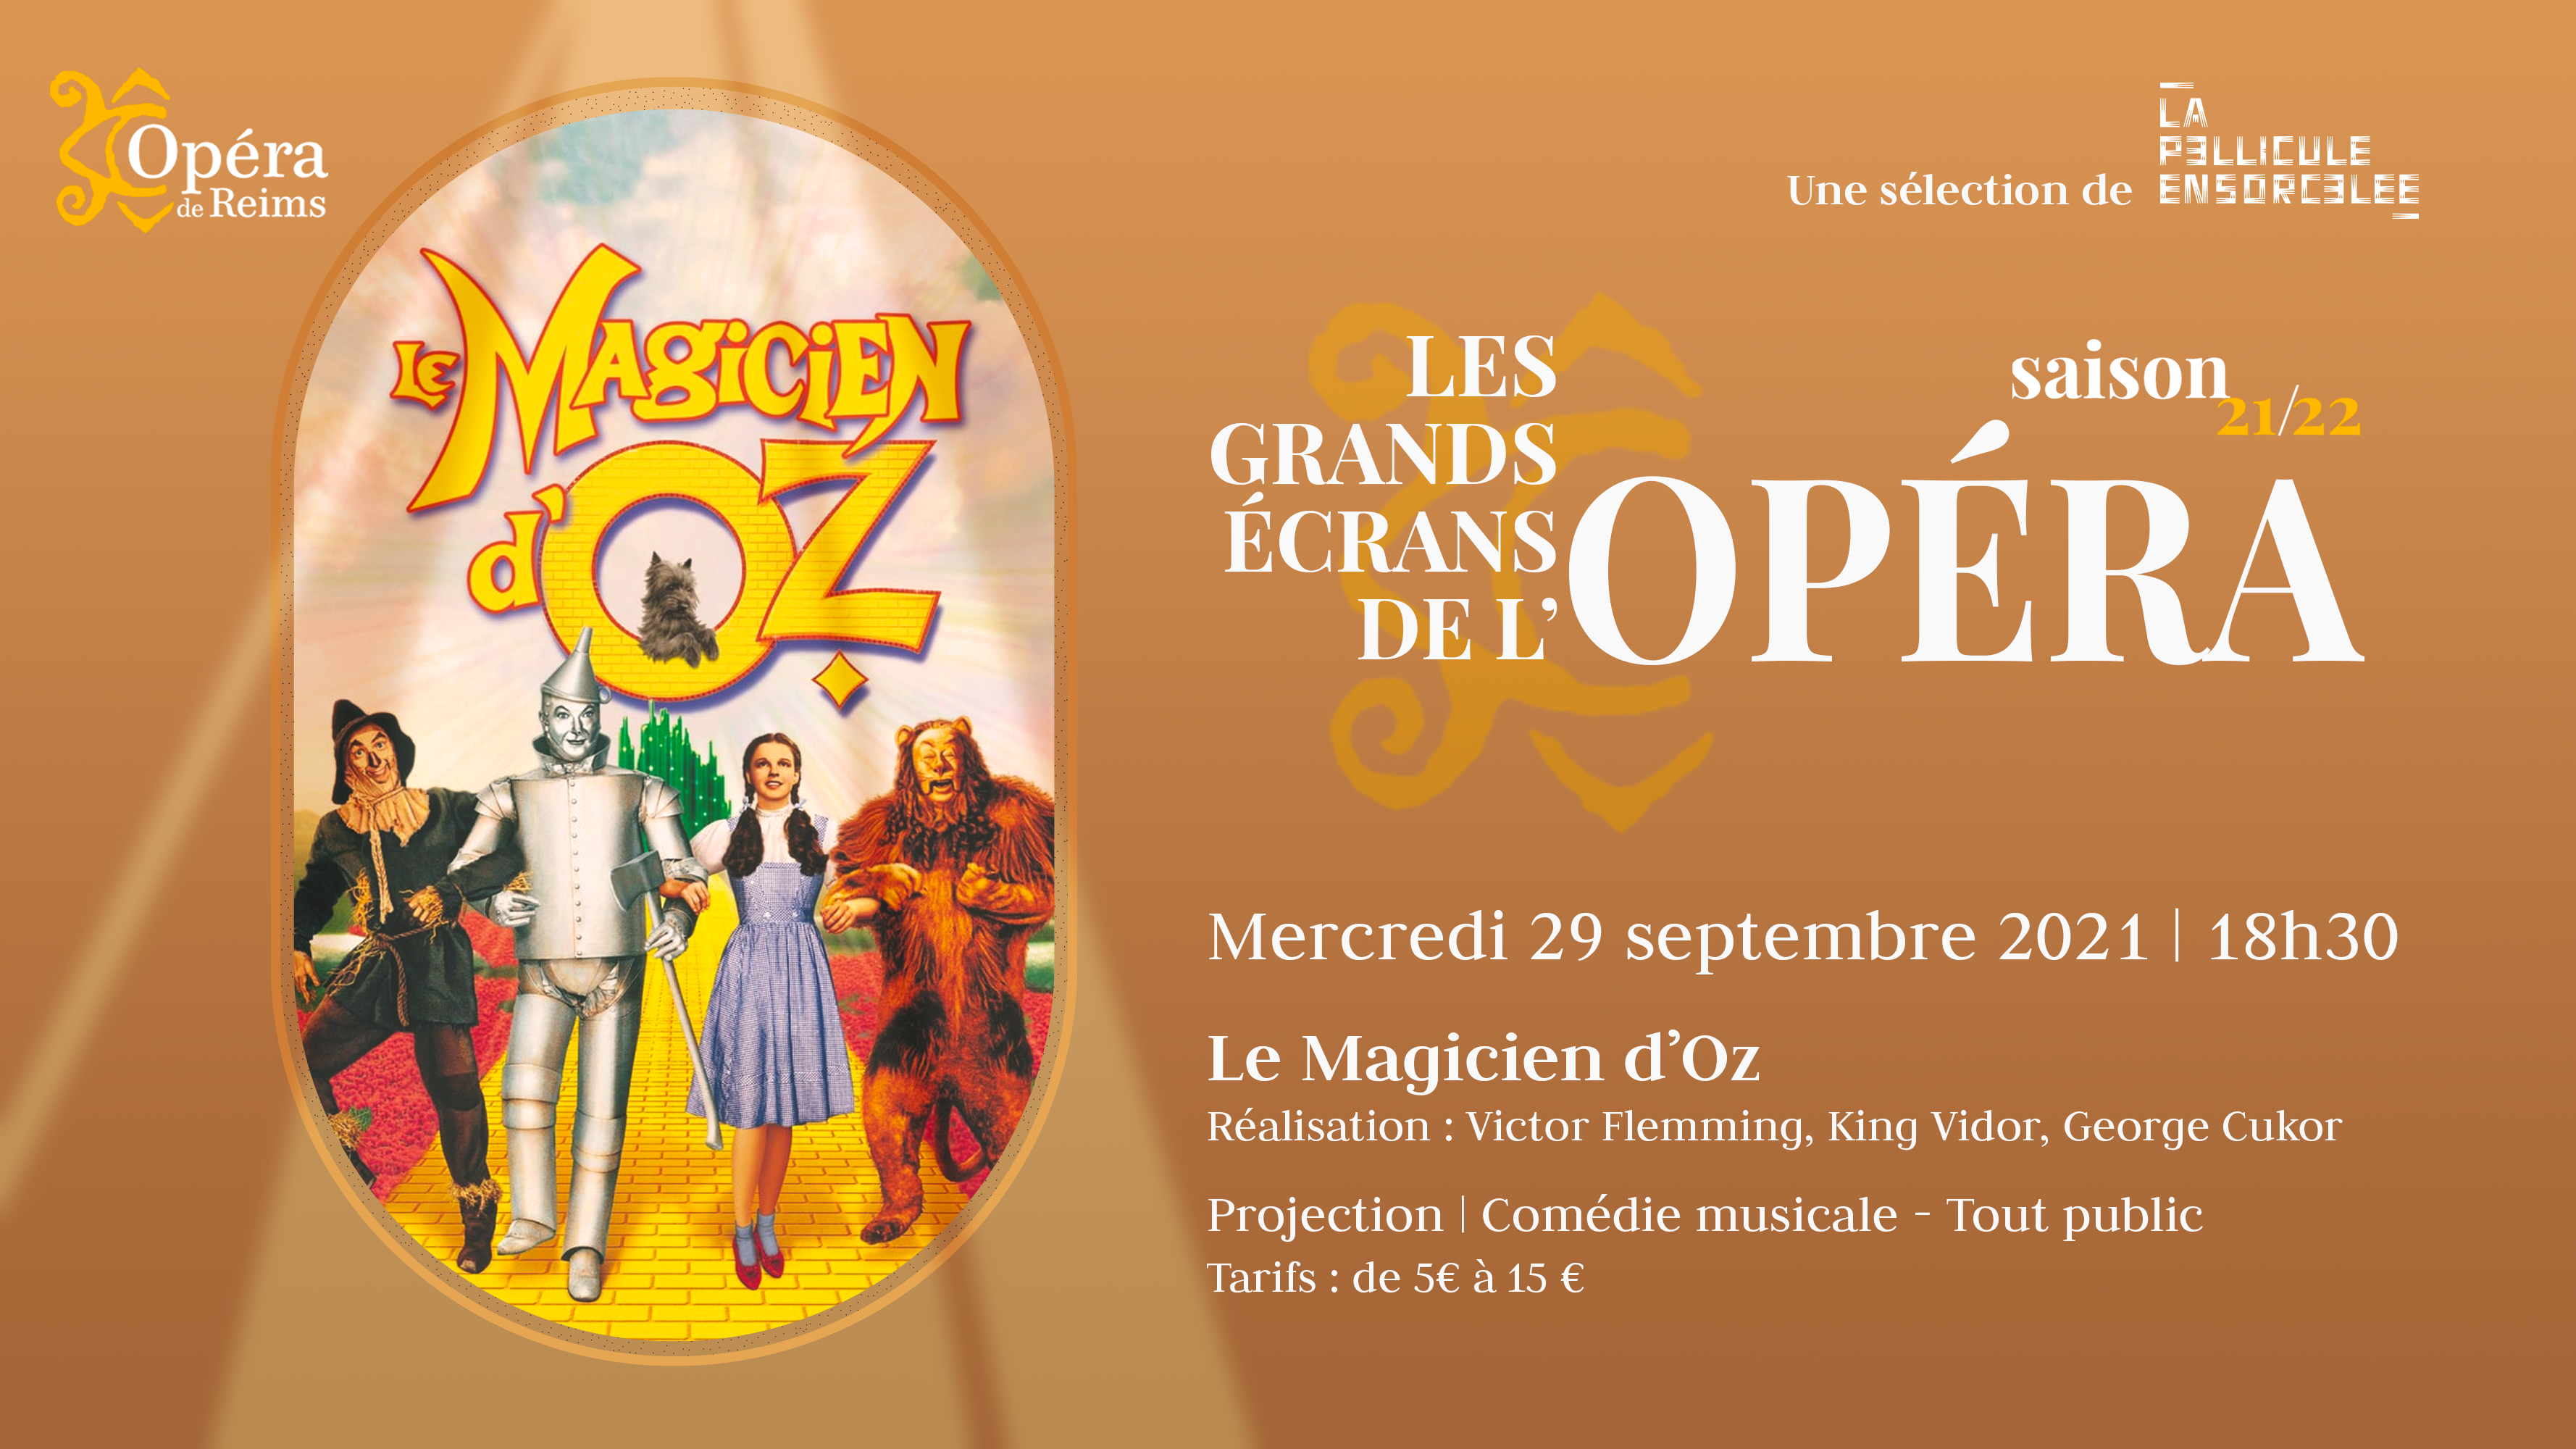 Les Grands Écrans de l’Opéra - Le Magicien d'Oz